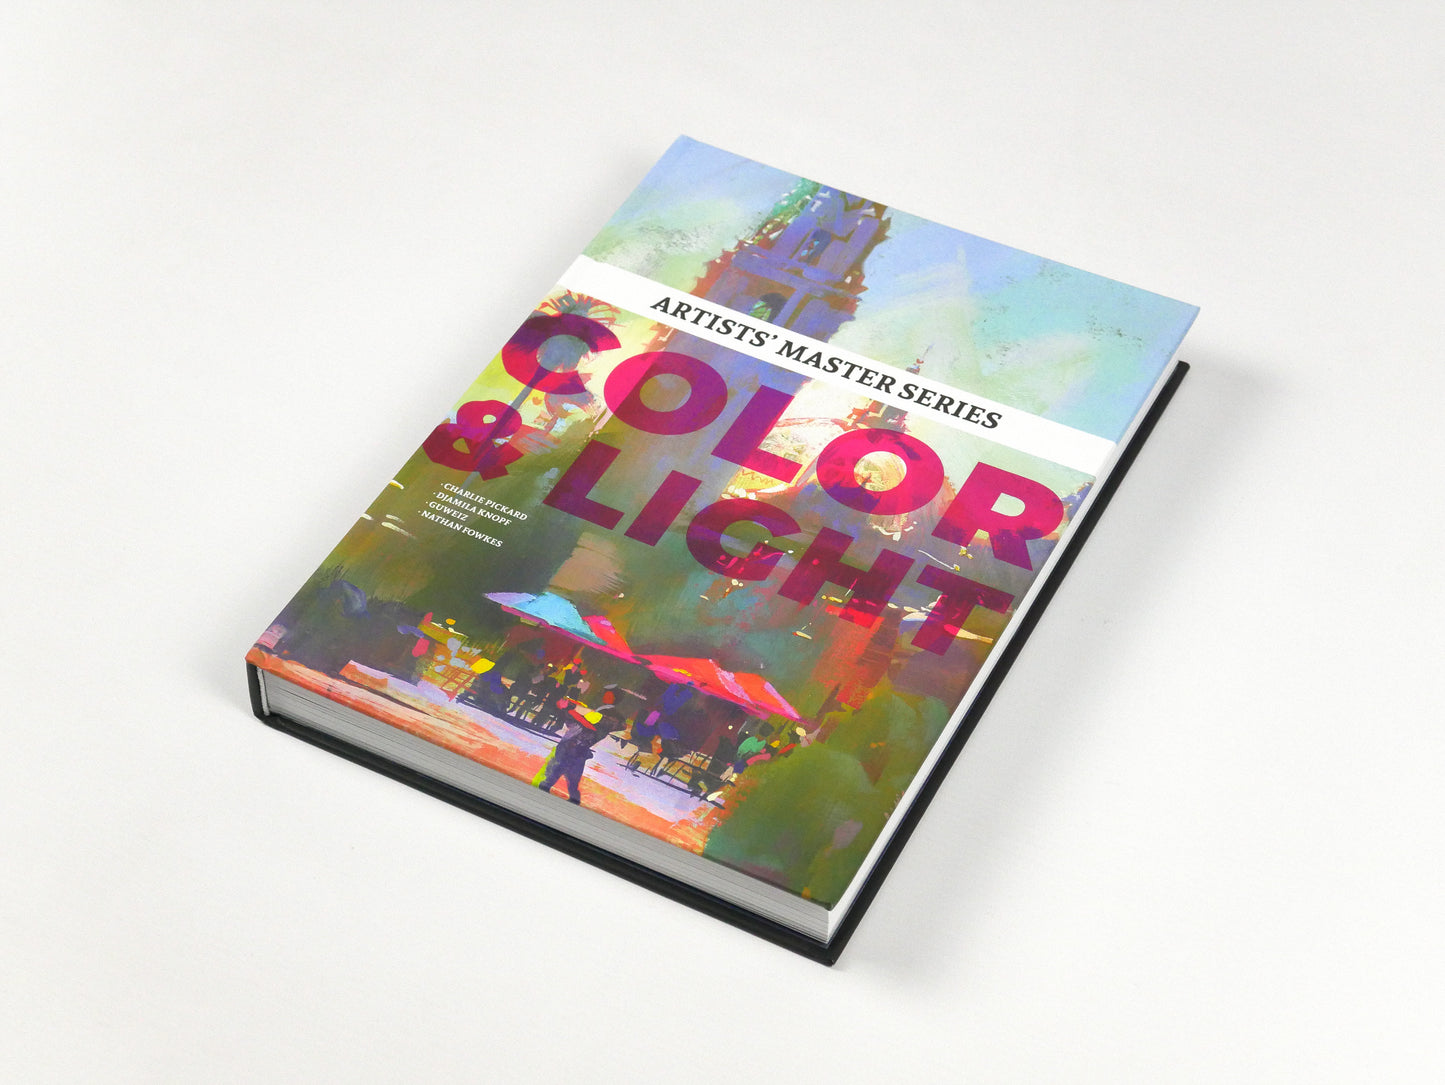 Artists' Master Series: Color & Light